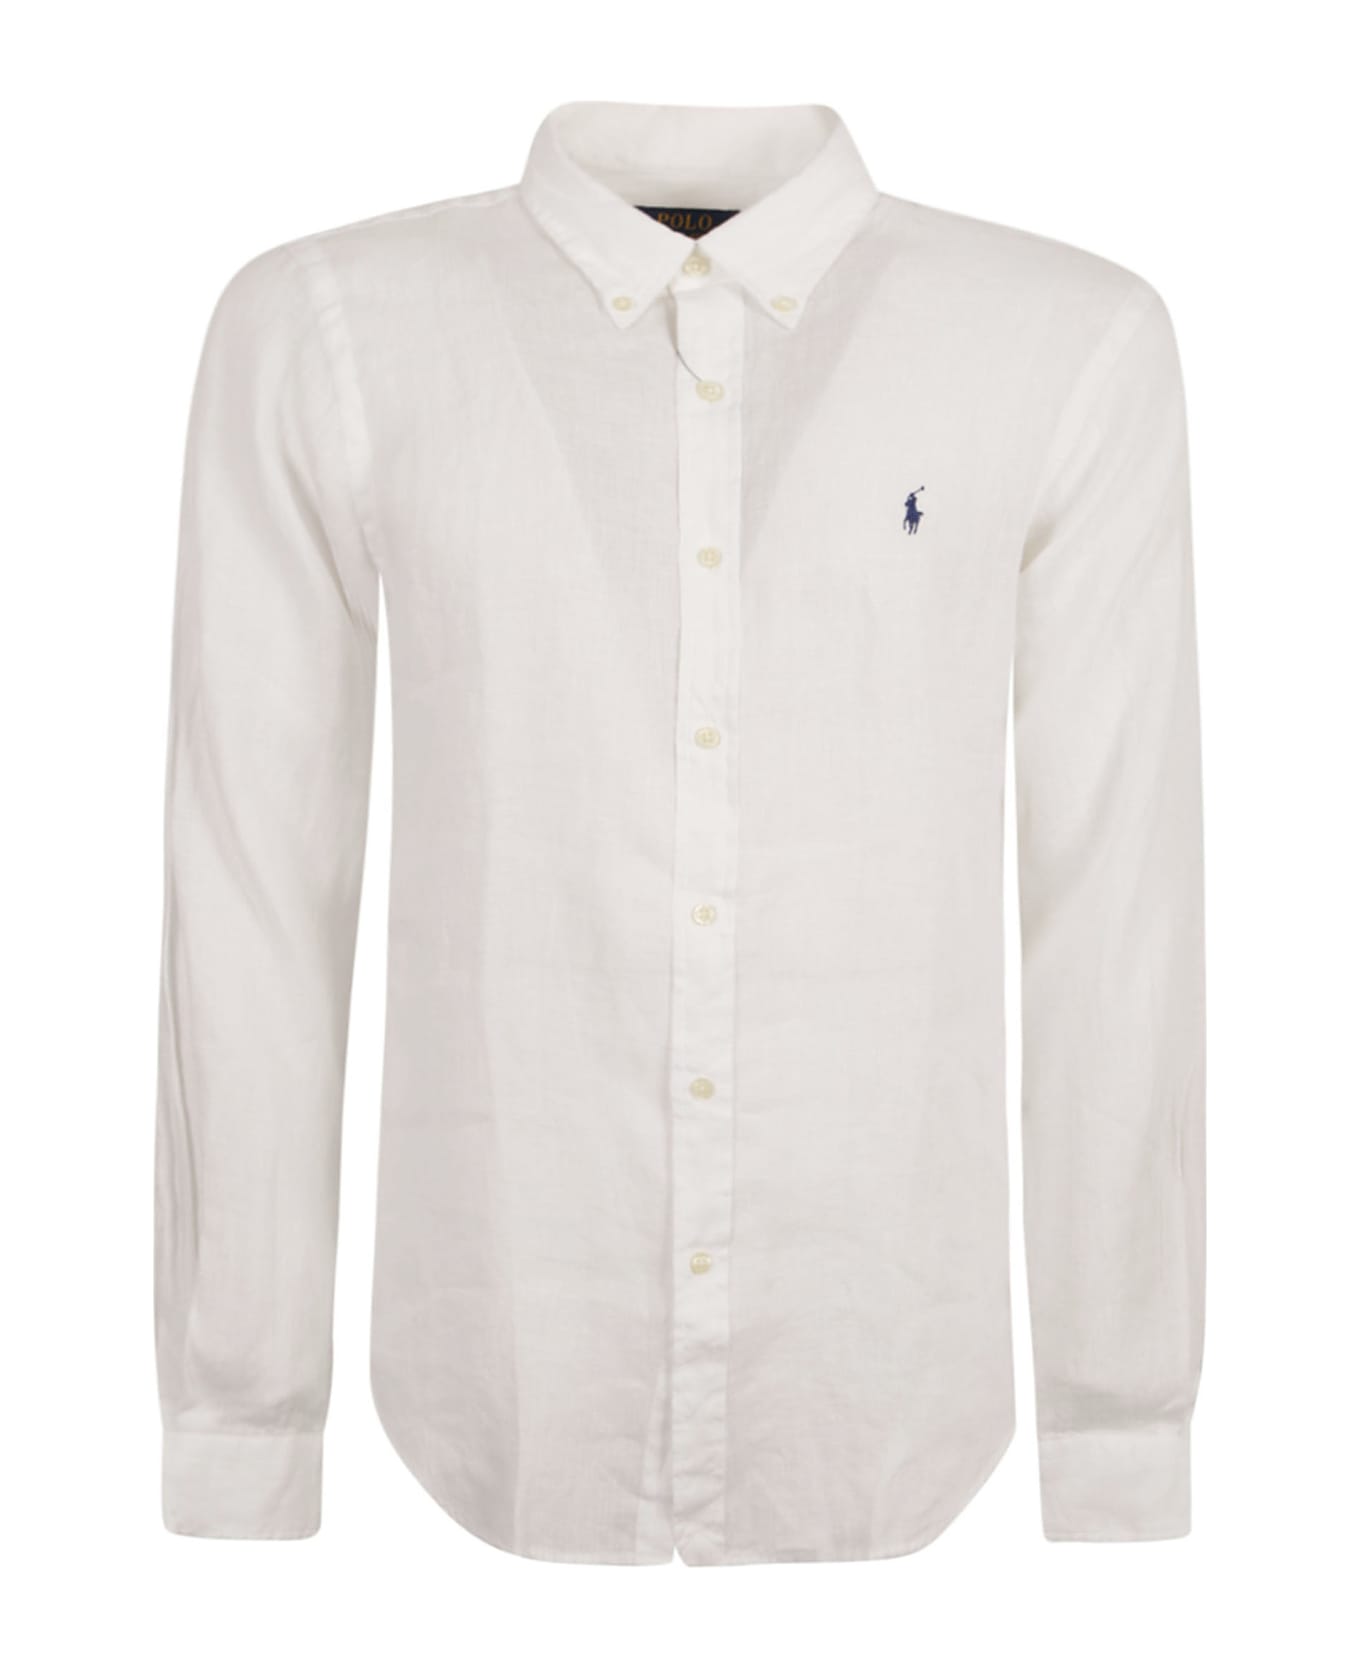 Ralph Lauren Logo Embroidered Round Hem Plain Shirt - White